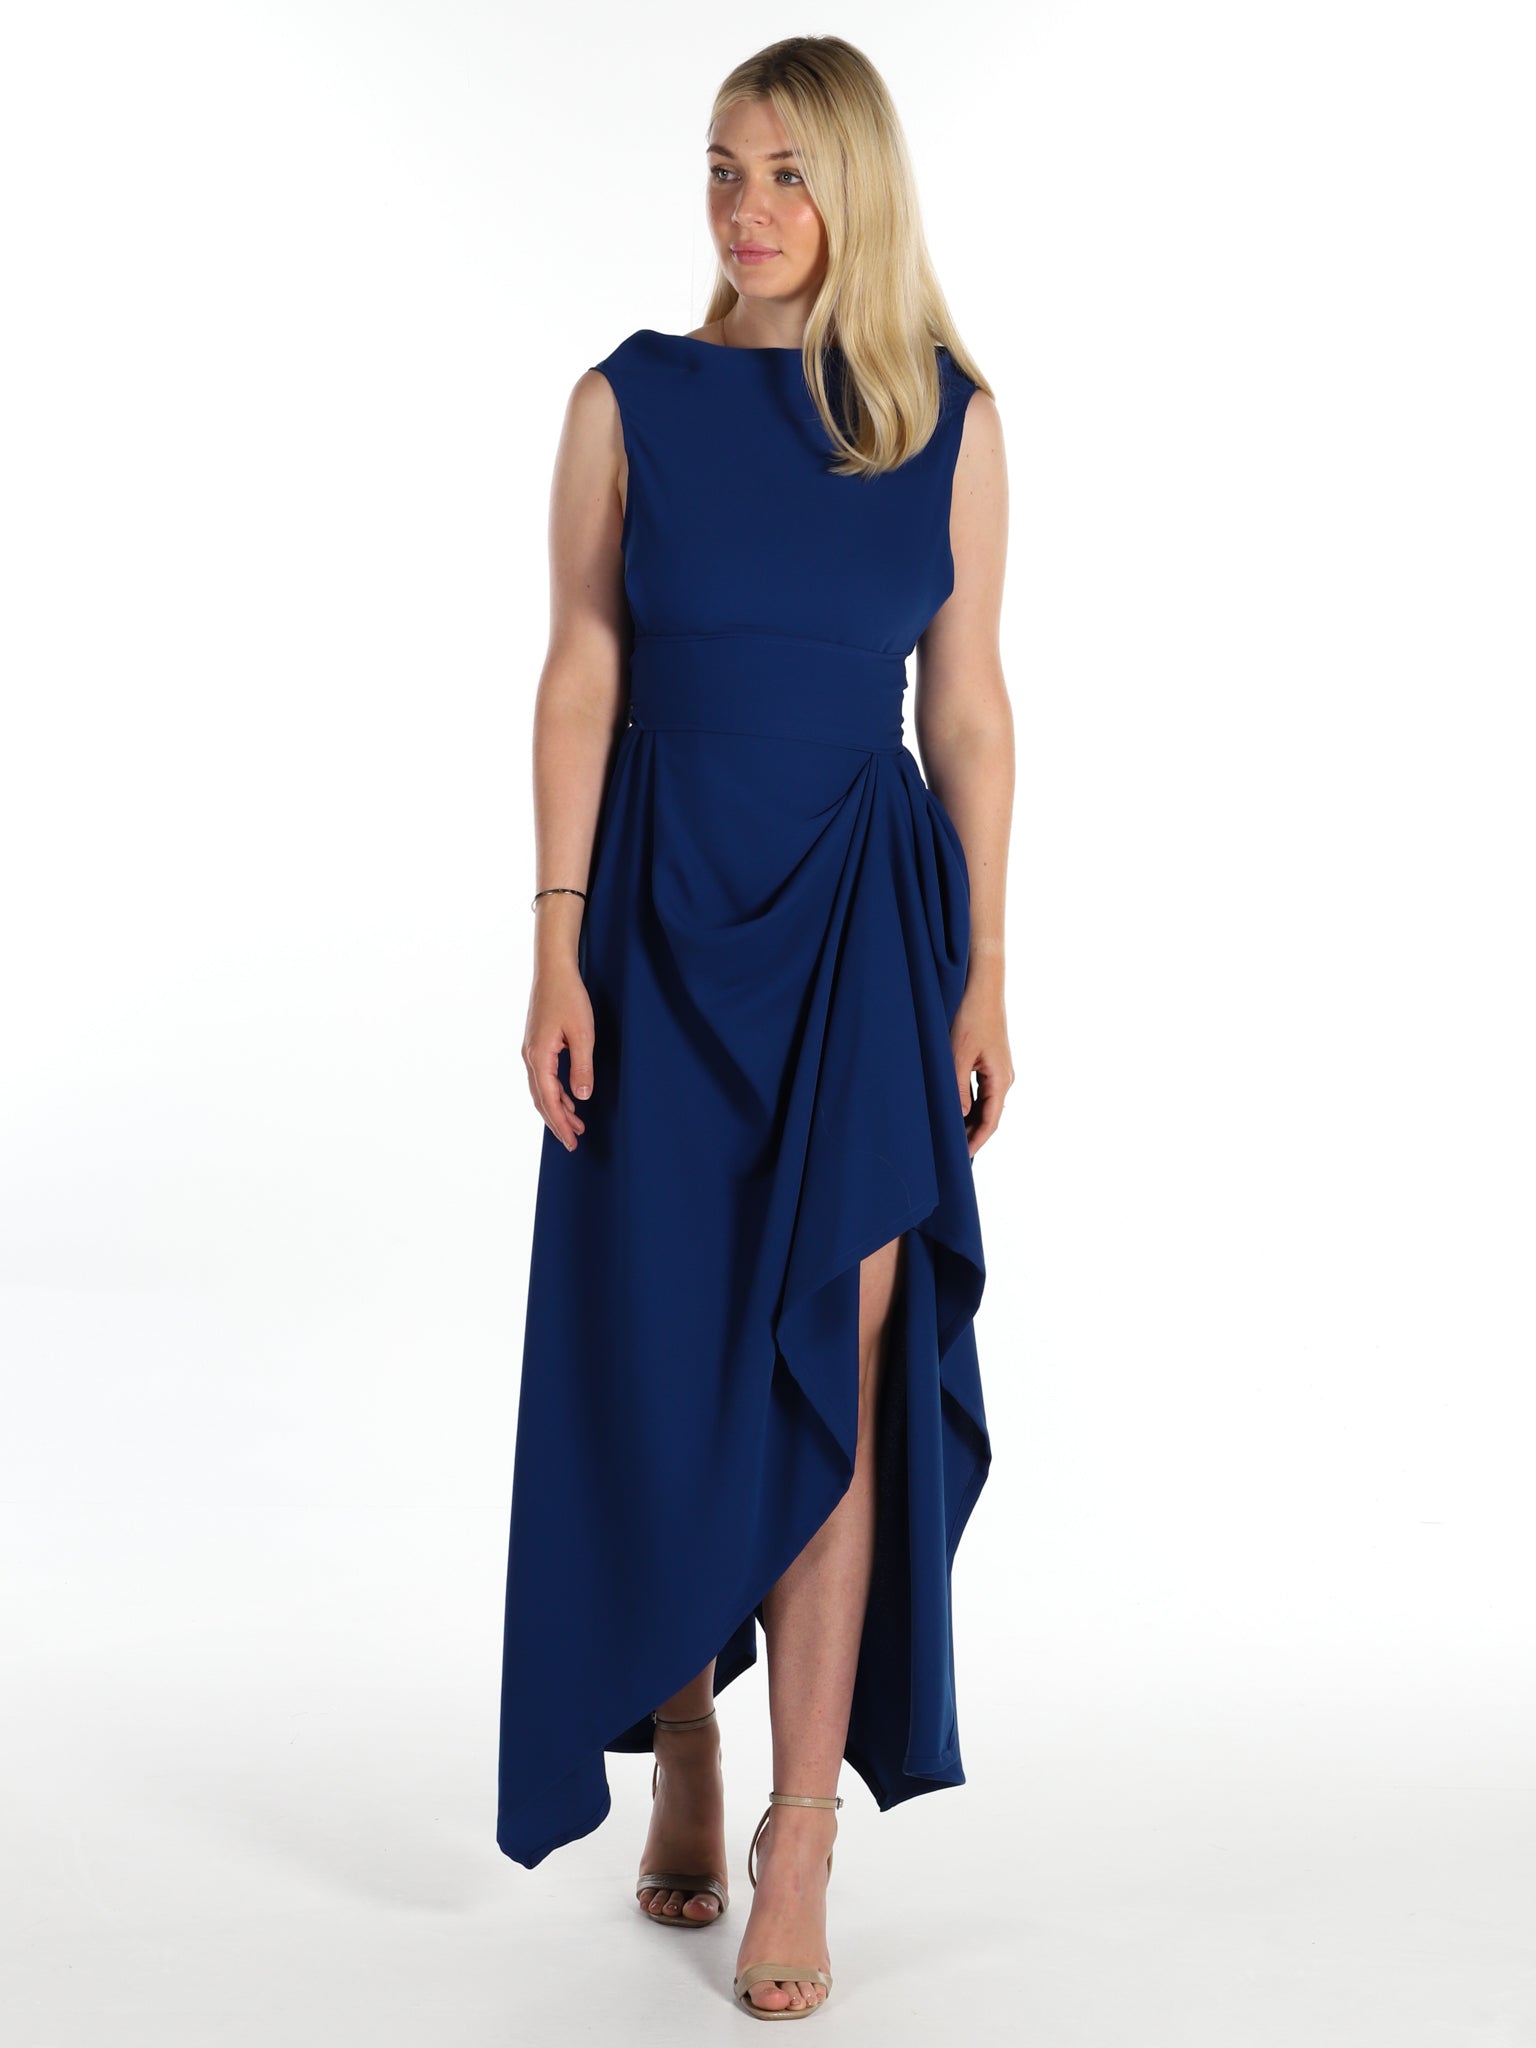 Blue Ivy Dress